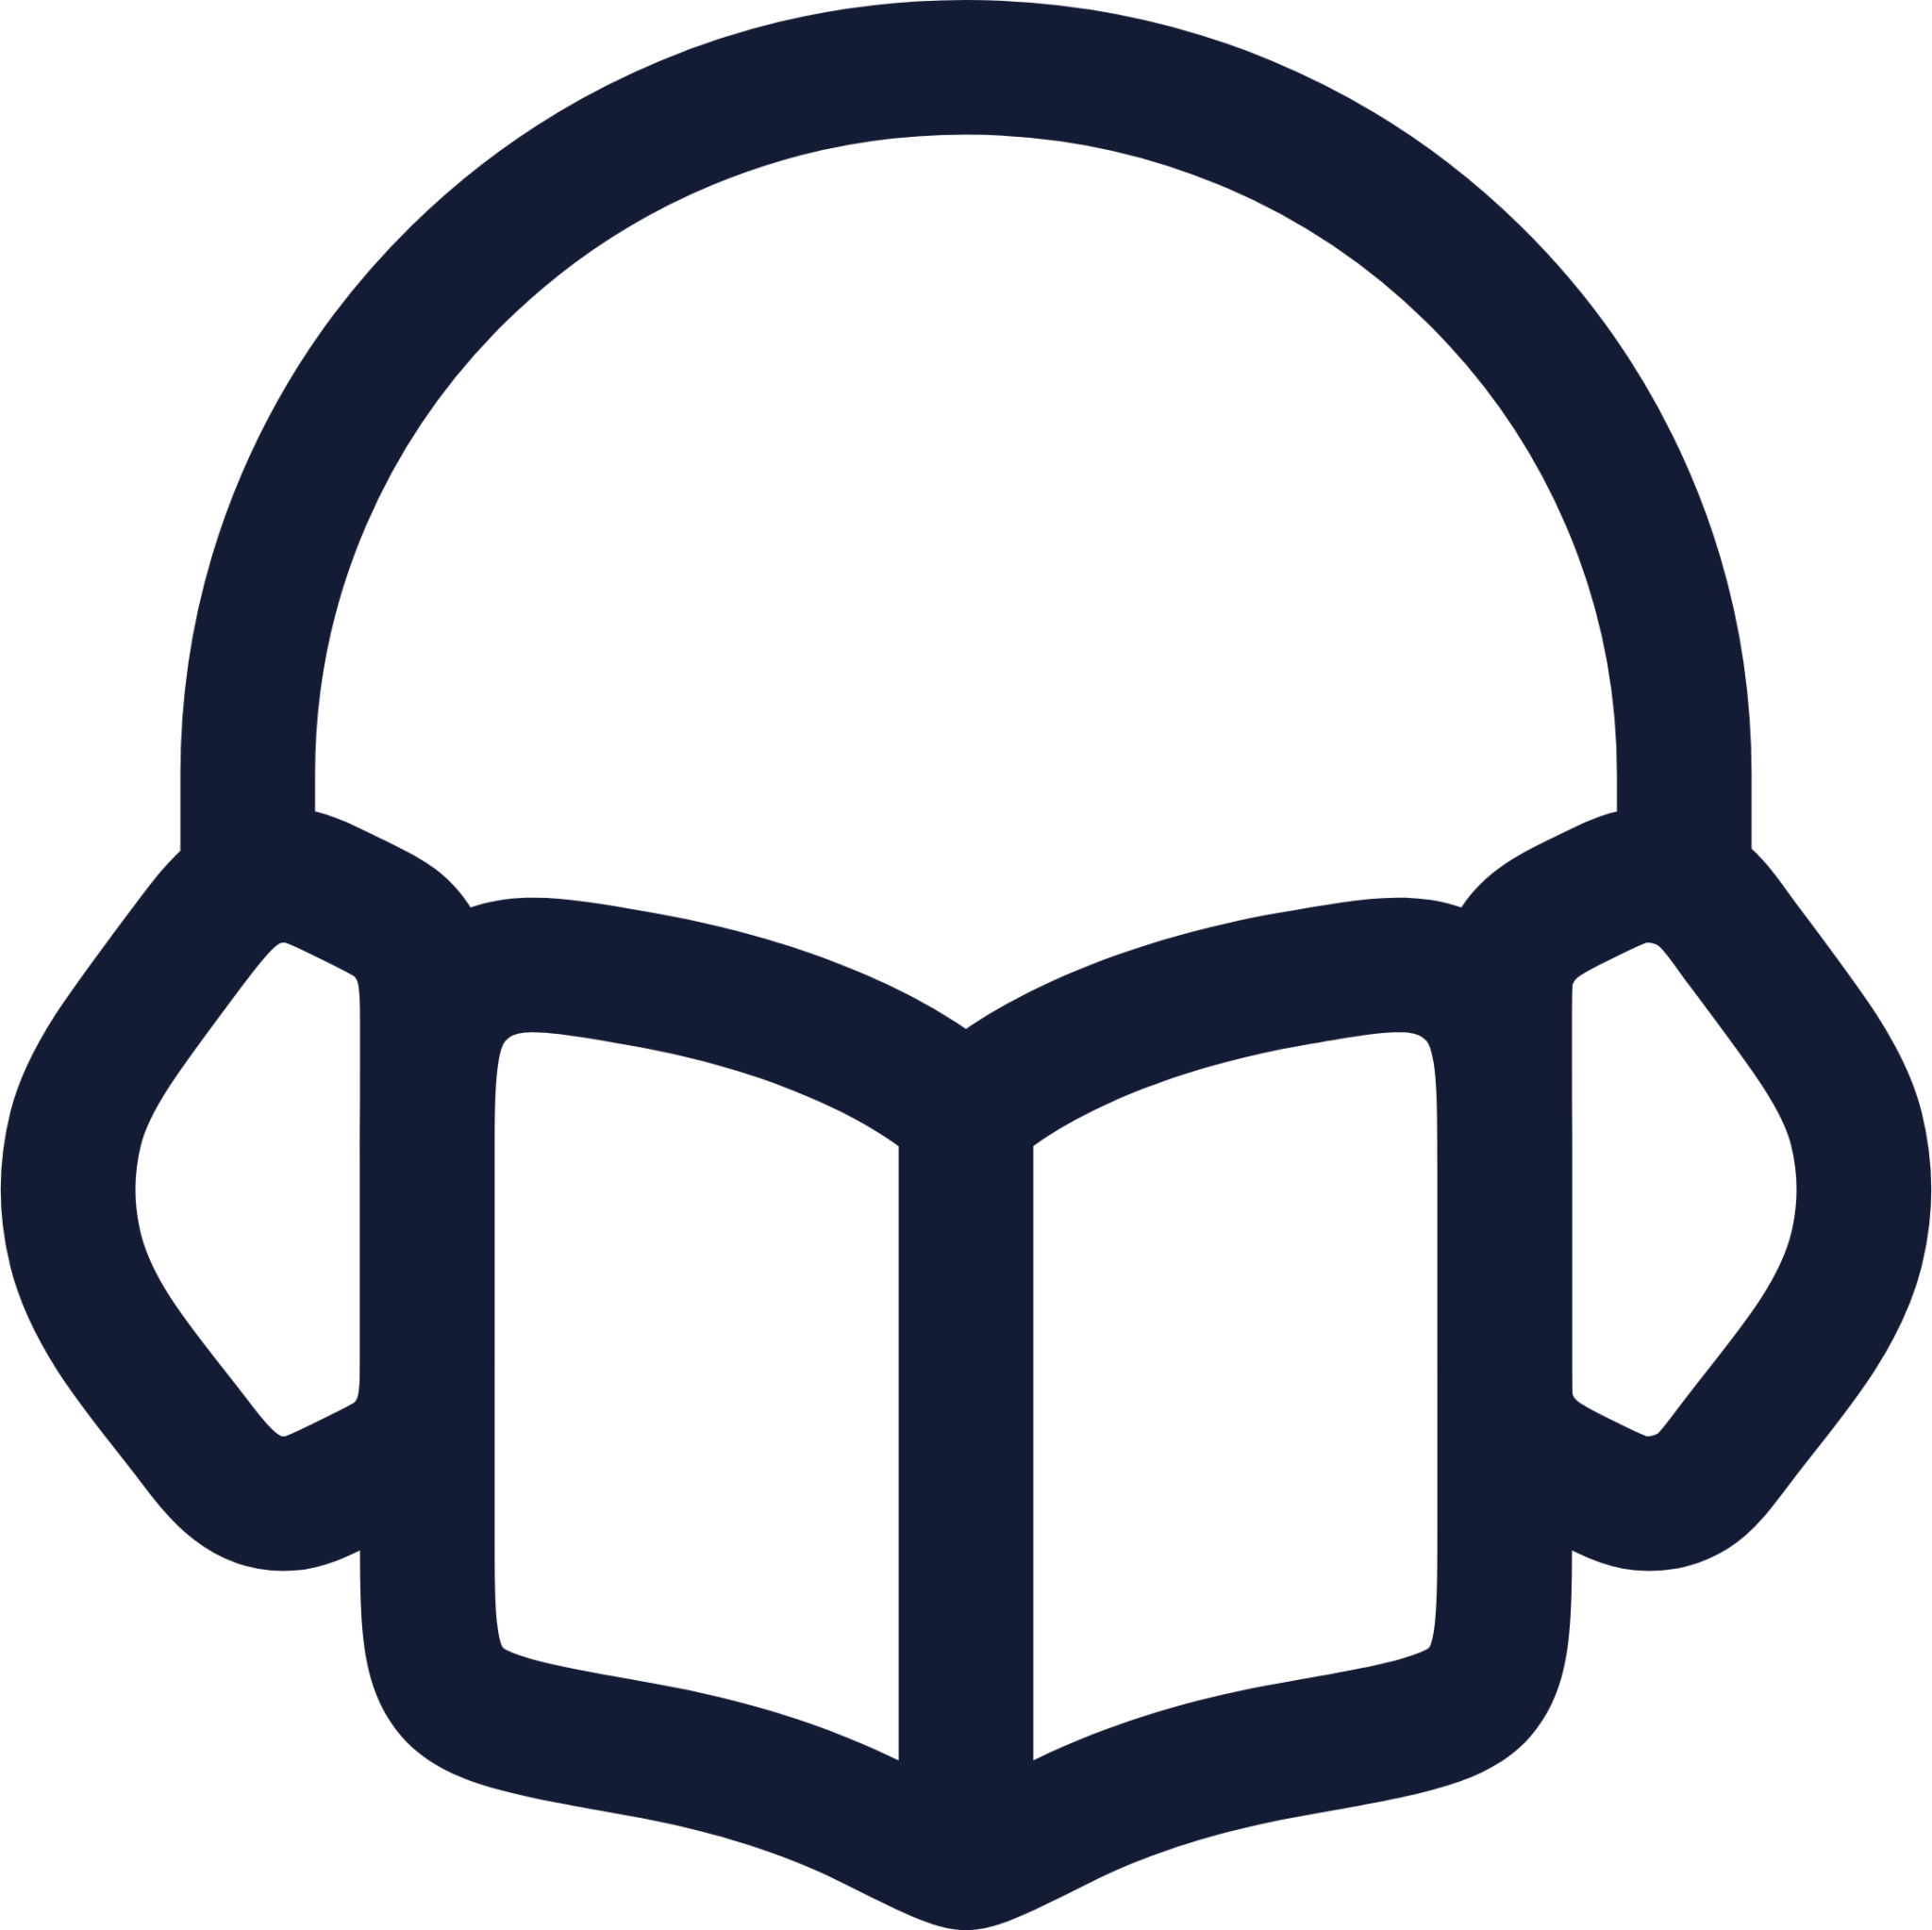 audio book icon